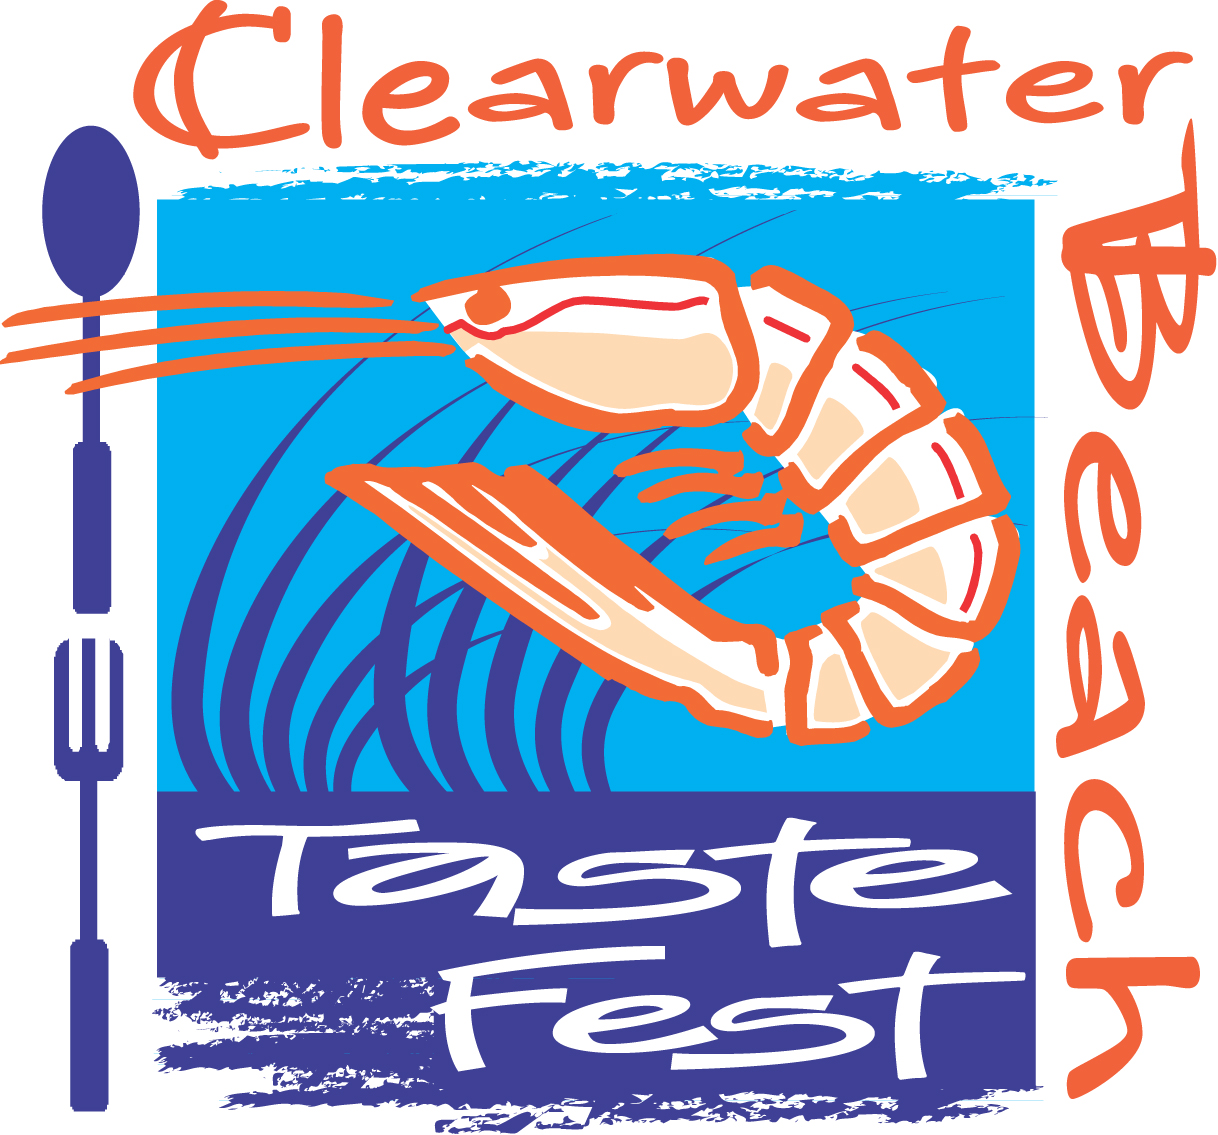 Clearwater Beach Taste Fest-Bonomo-Realty